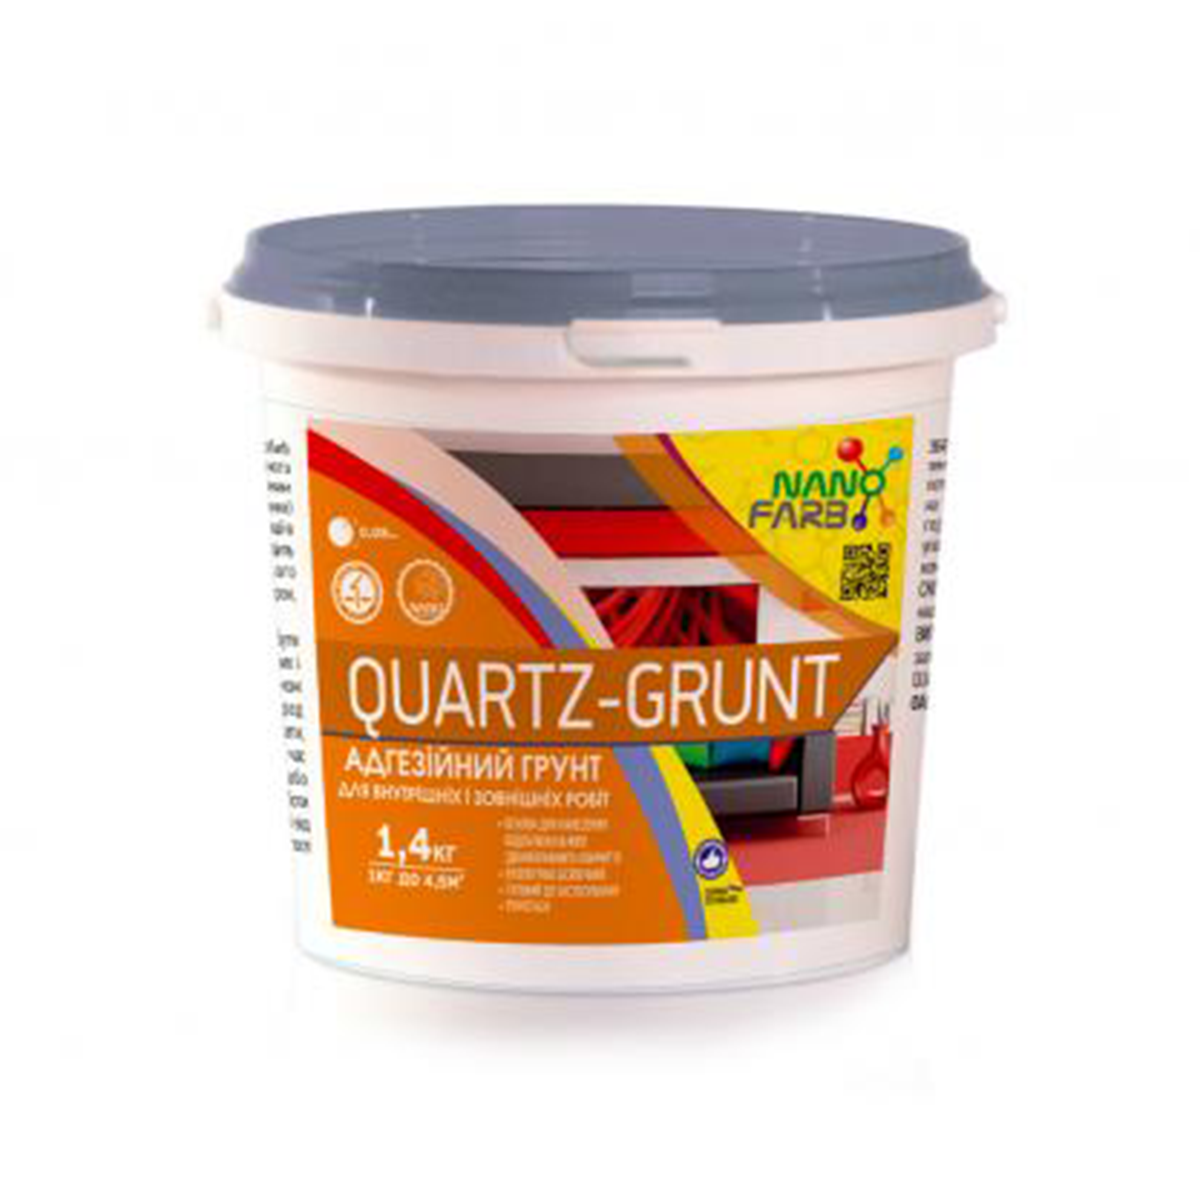 Кварцова ґрунтовка Nanofarb Quartz-Grunt 1.4 кг